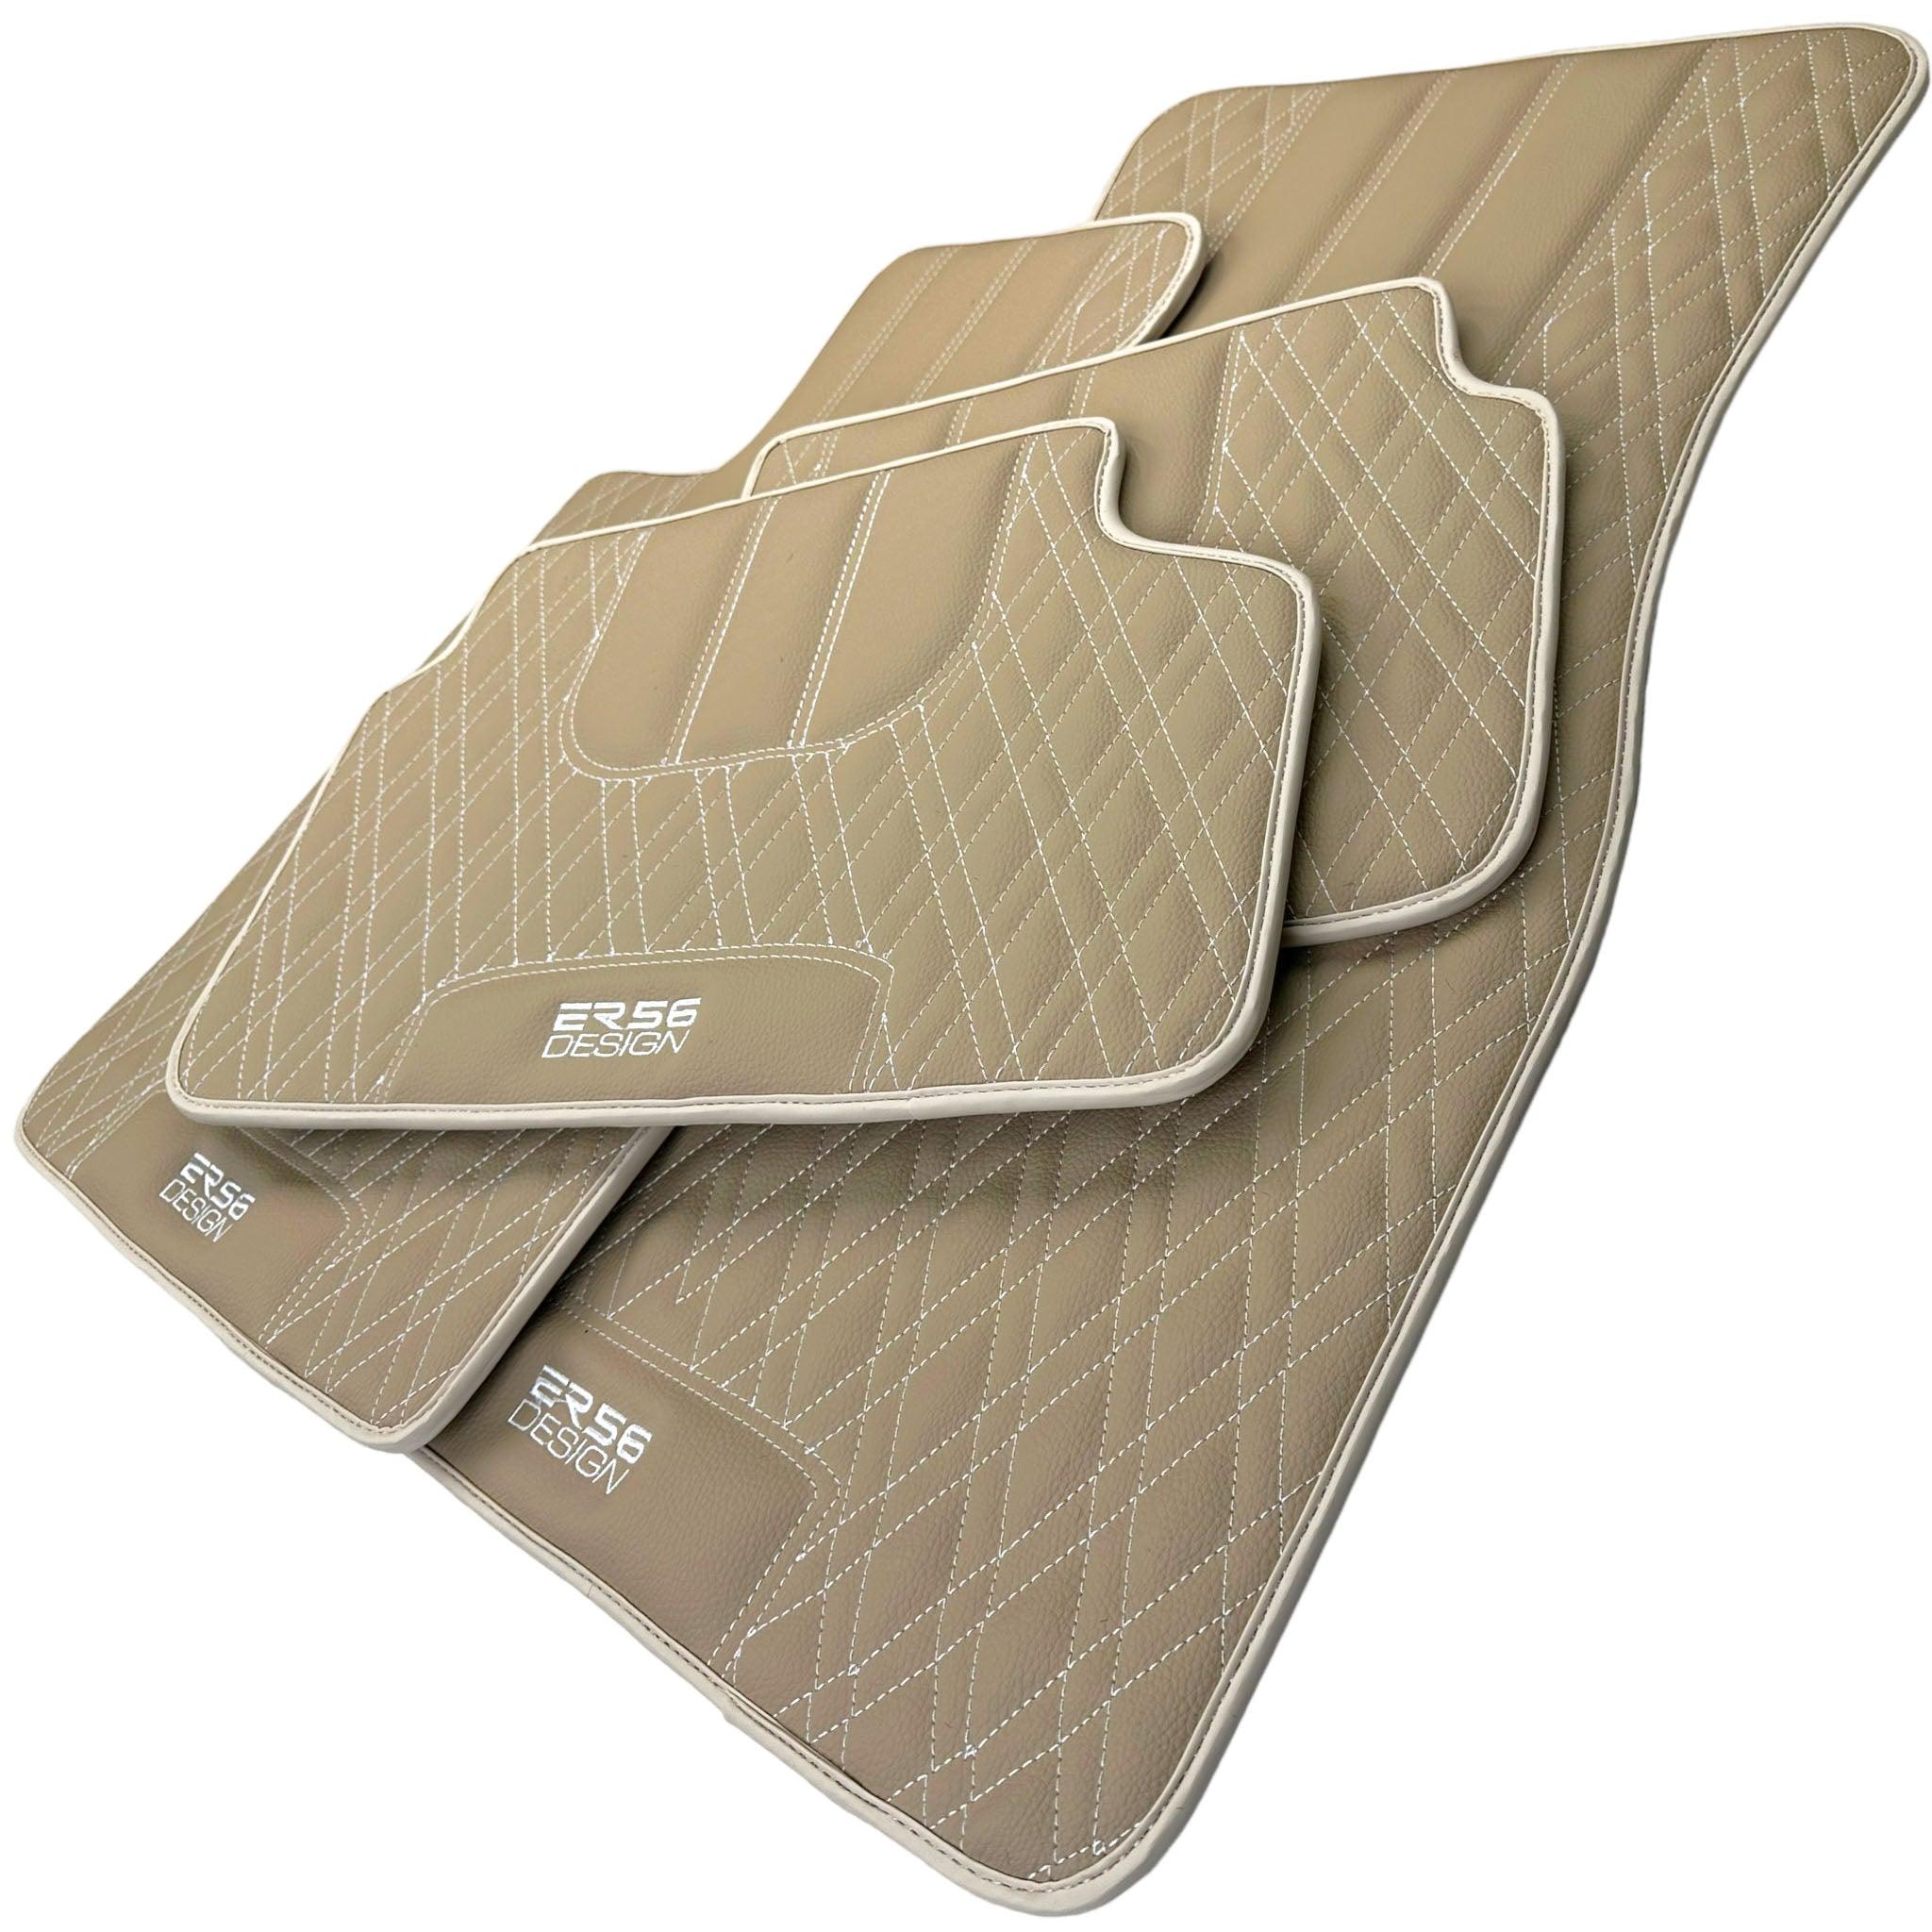 Beige Leather Floor Floor Mats For BMW 6 Series E63 | Fighter Jet Edition AutoWin Brand |Sky Blue Trim